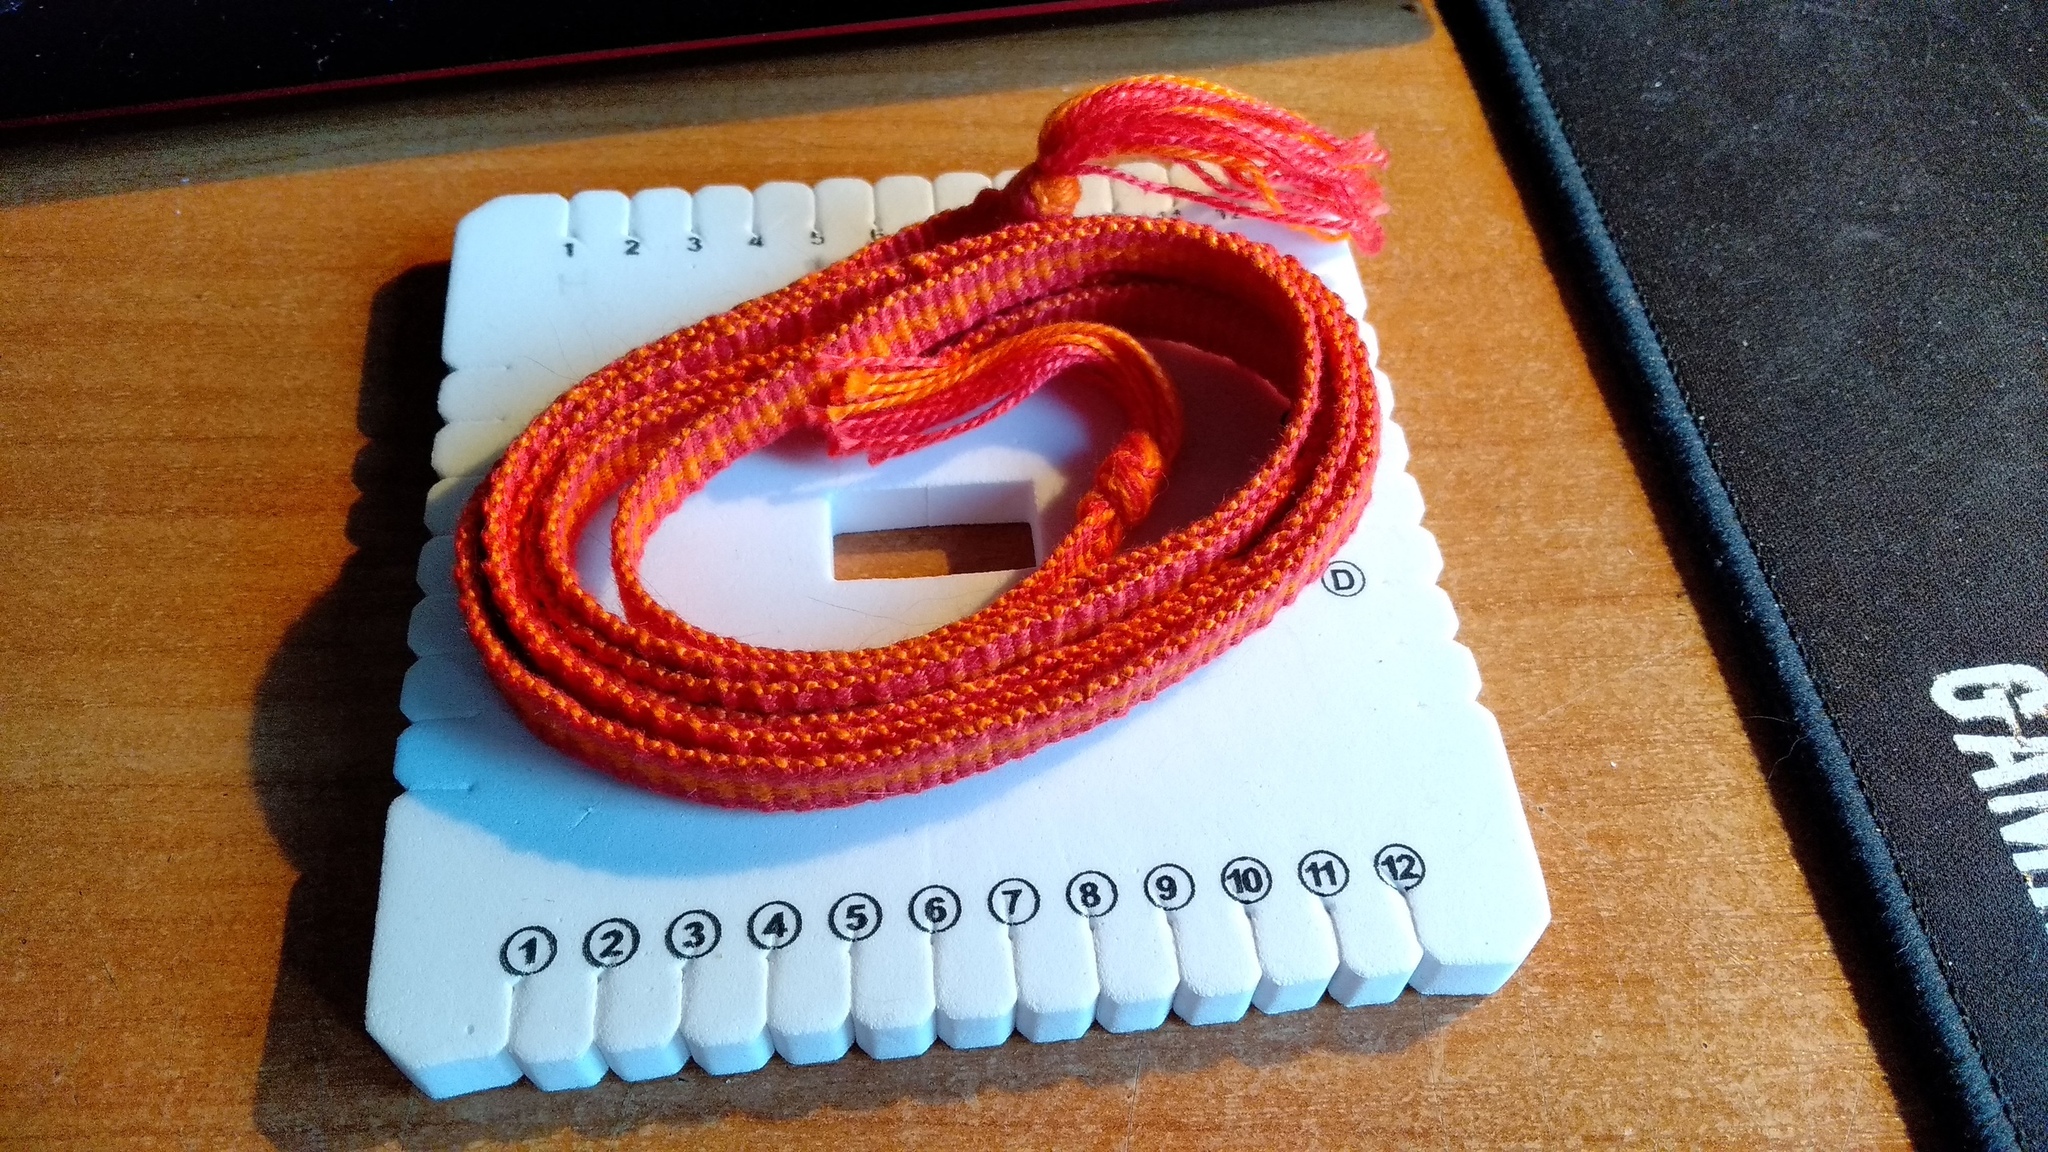 kumihimo cord - My, Weaving, Braided cord, Kumihimo, Needlework without process, Needlework, Longpost